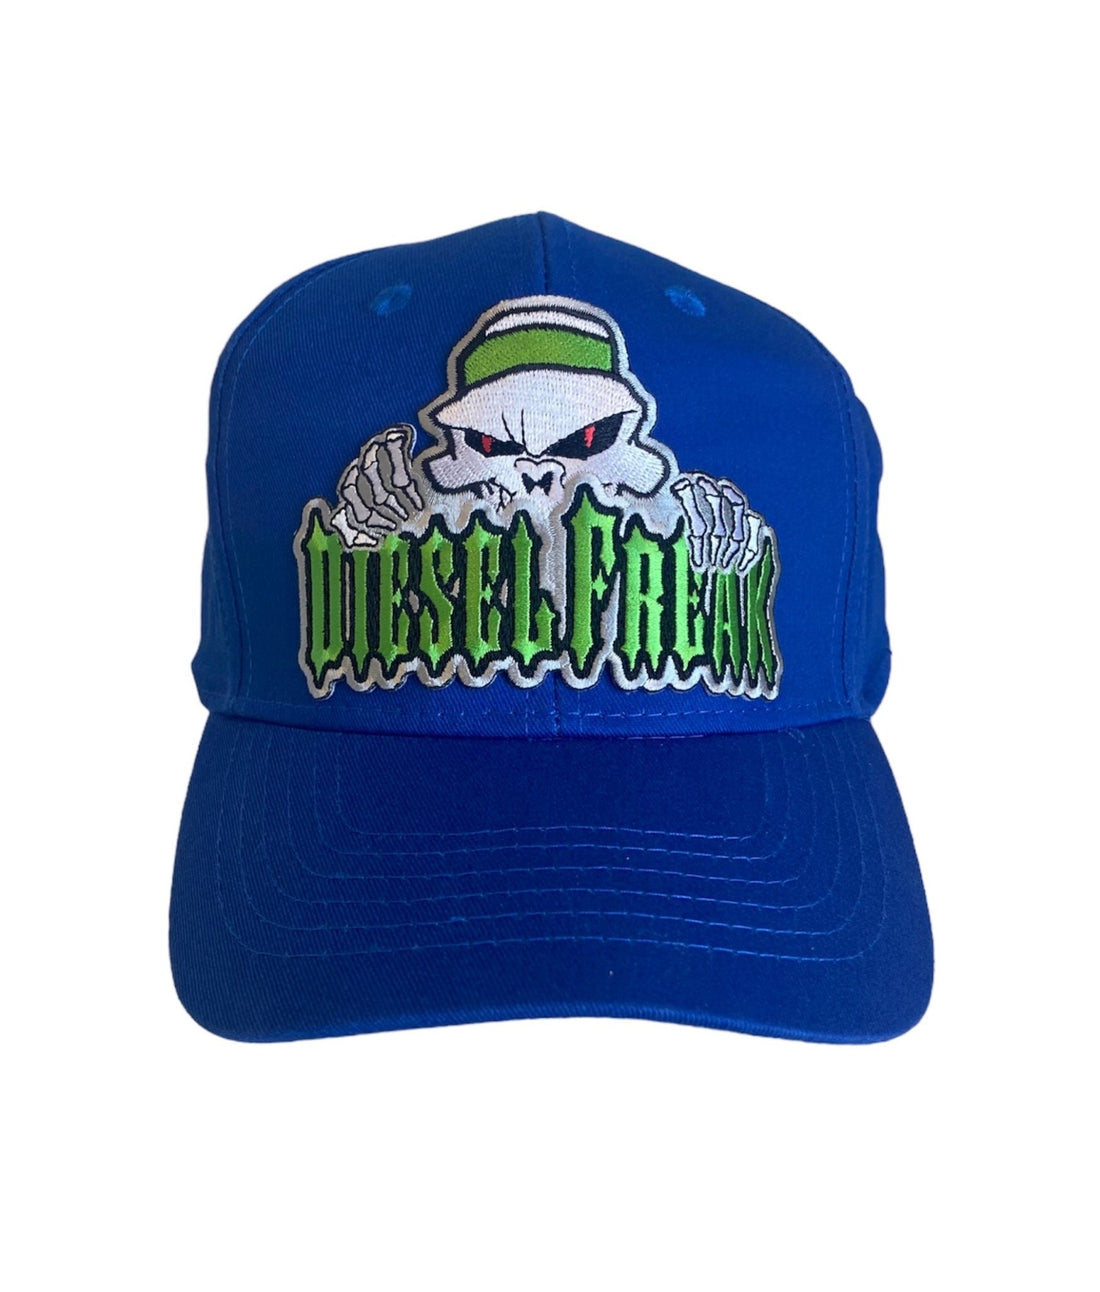 Youth Green Peeping Skully On Royal Blue Hat - Diesel Freak